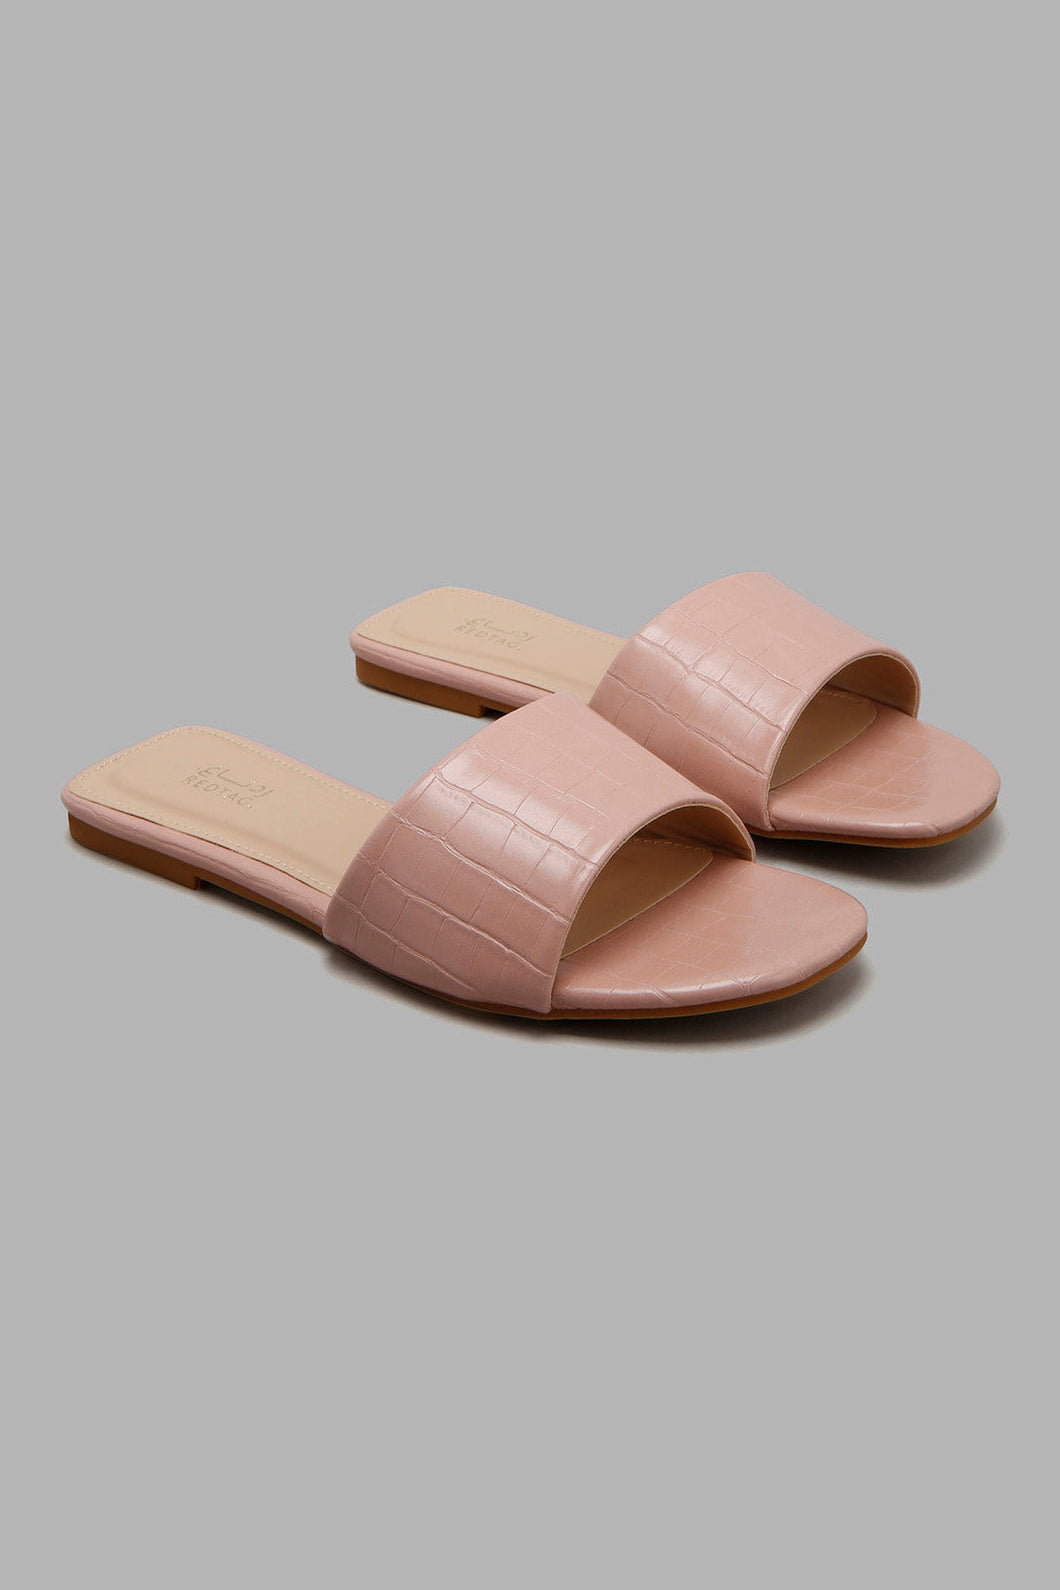 Pink Croc Print Mule حذاء مفتوح بلون وردي فاتح بنقشة تمساح